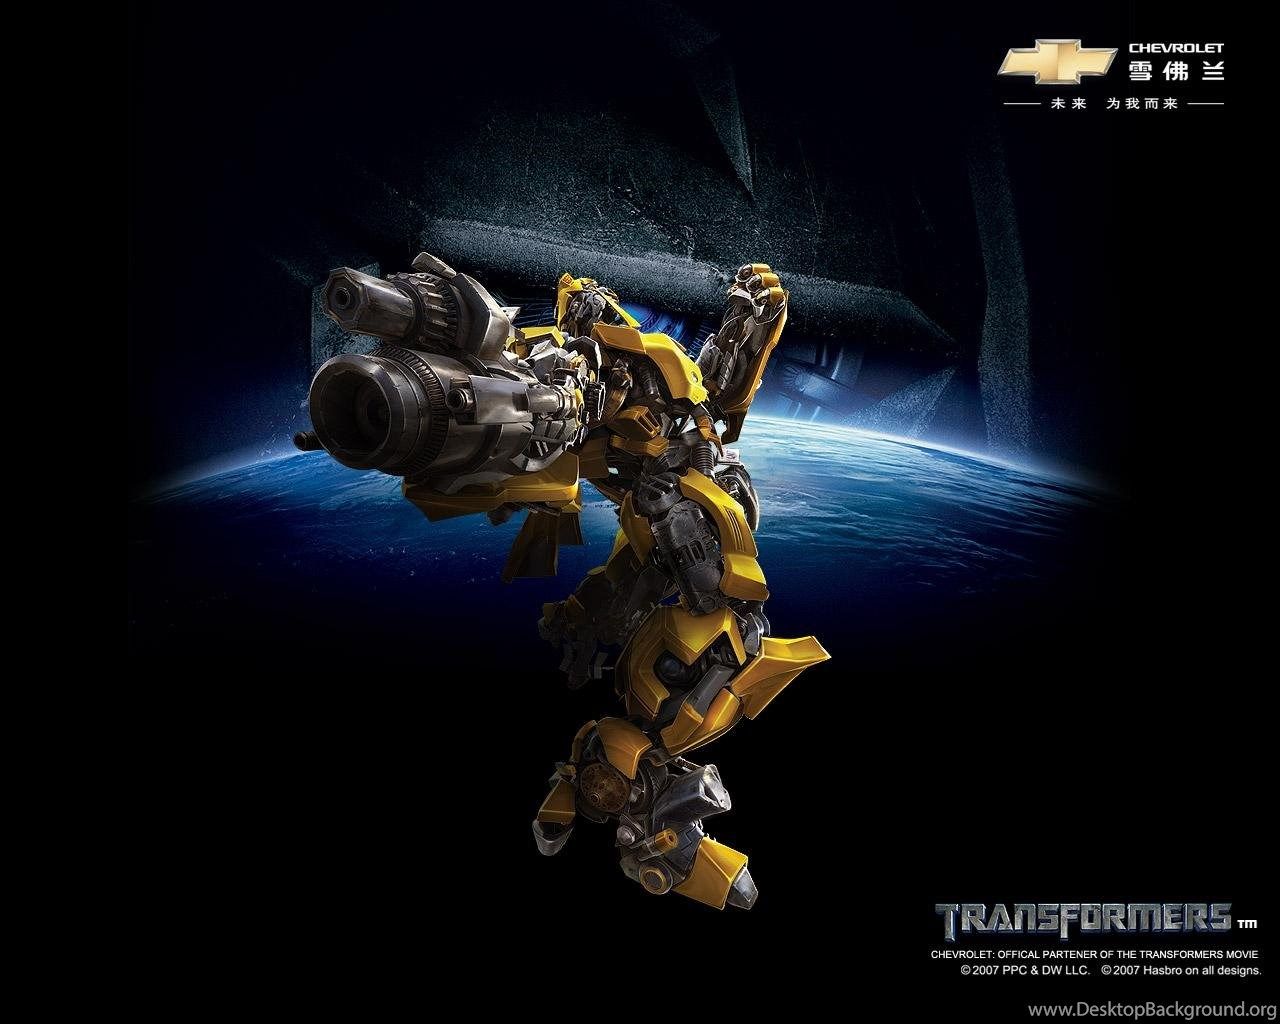 Wallpaper Transformers Movies Transformers 1 Movies Image